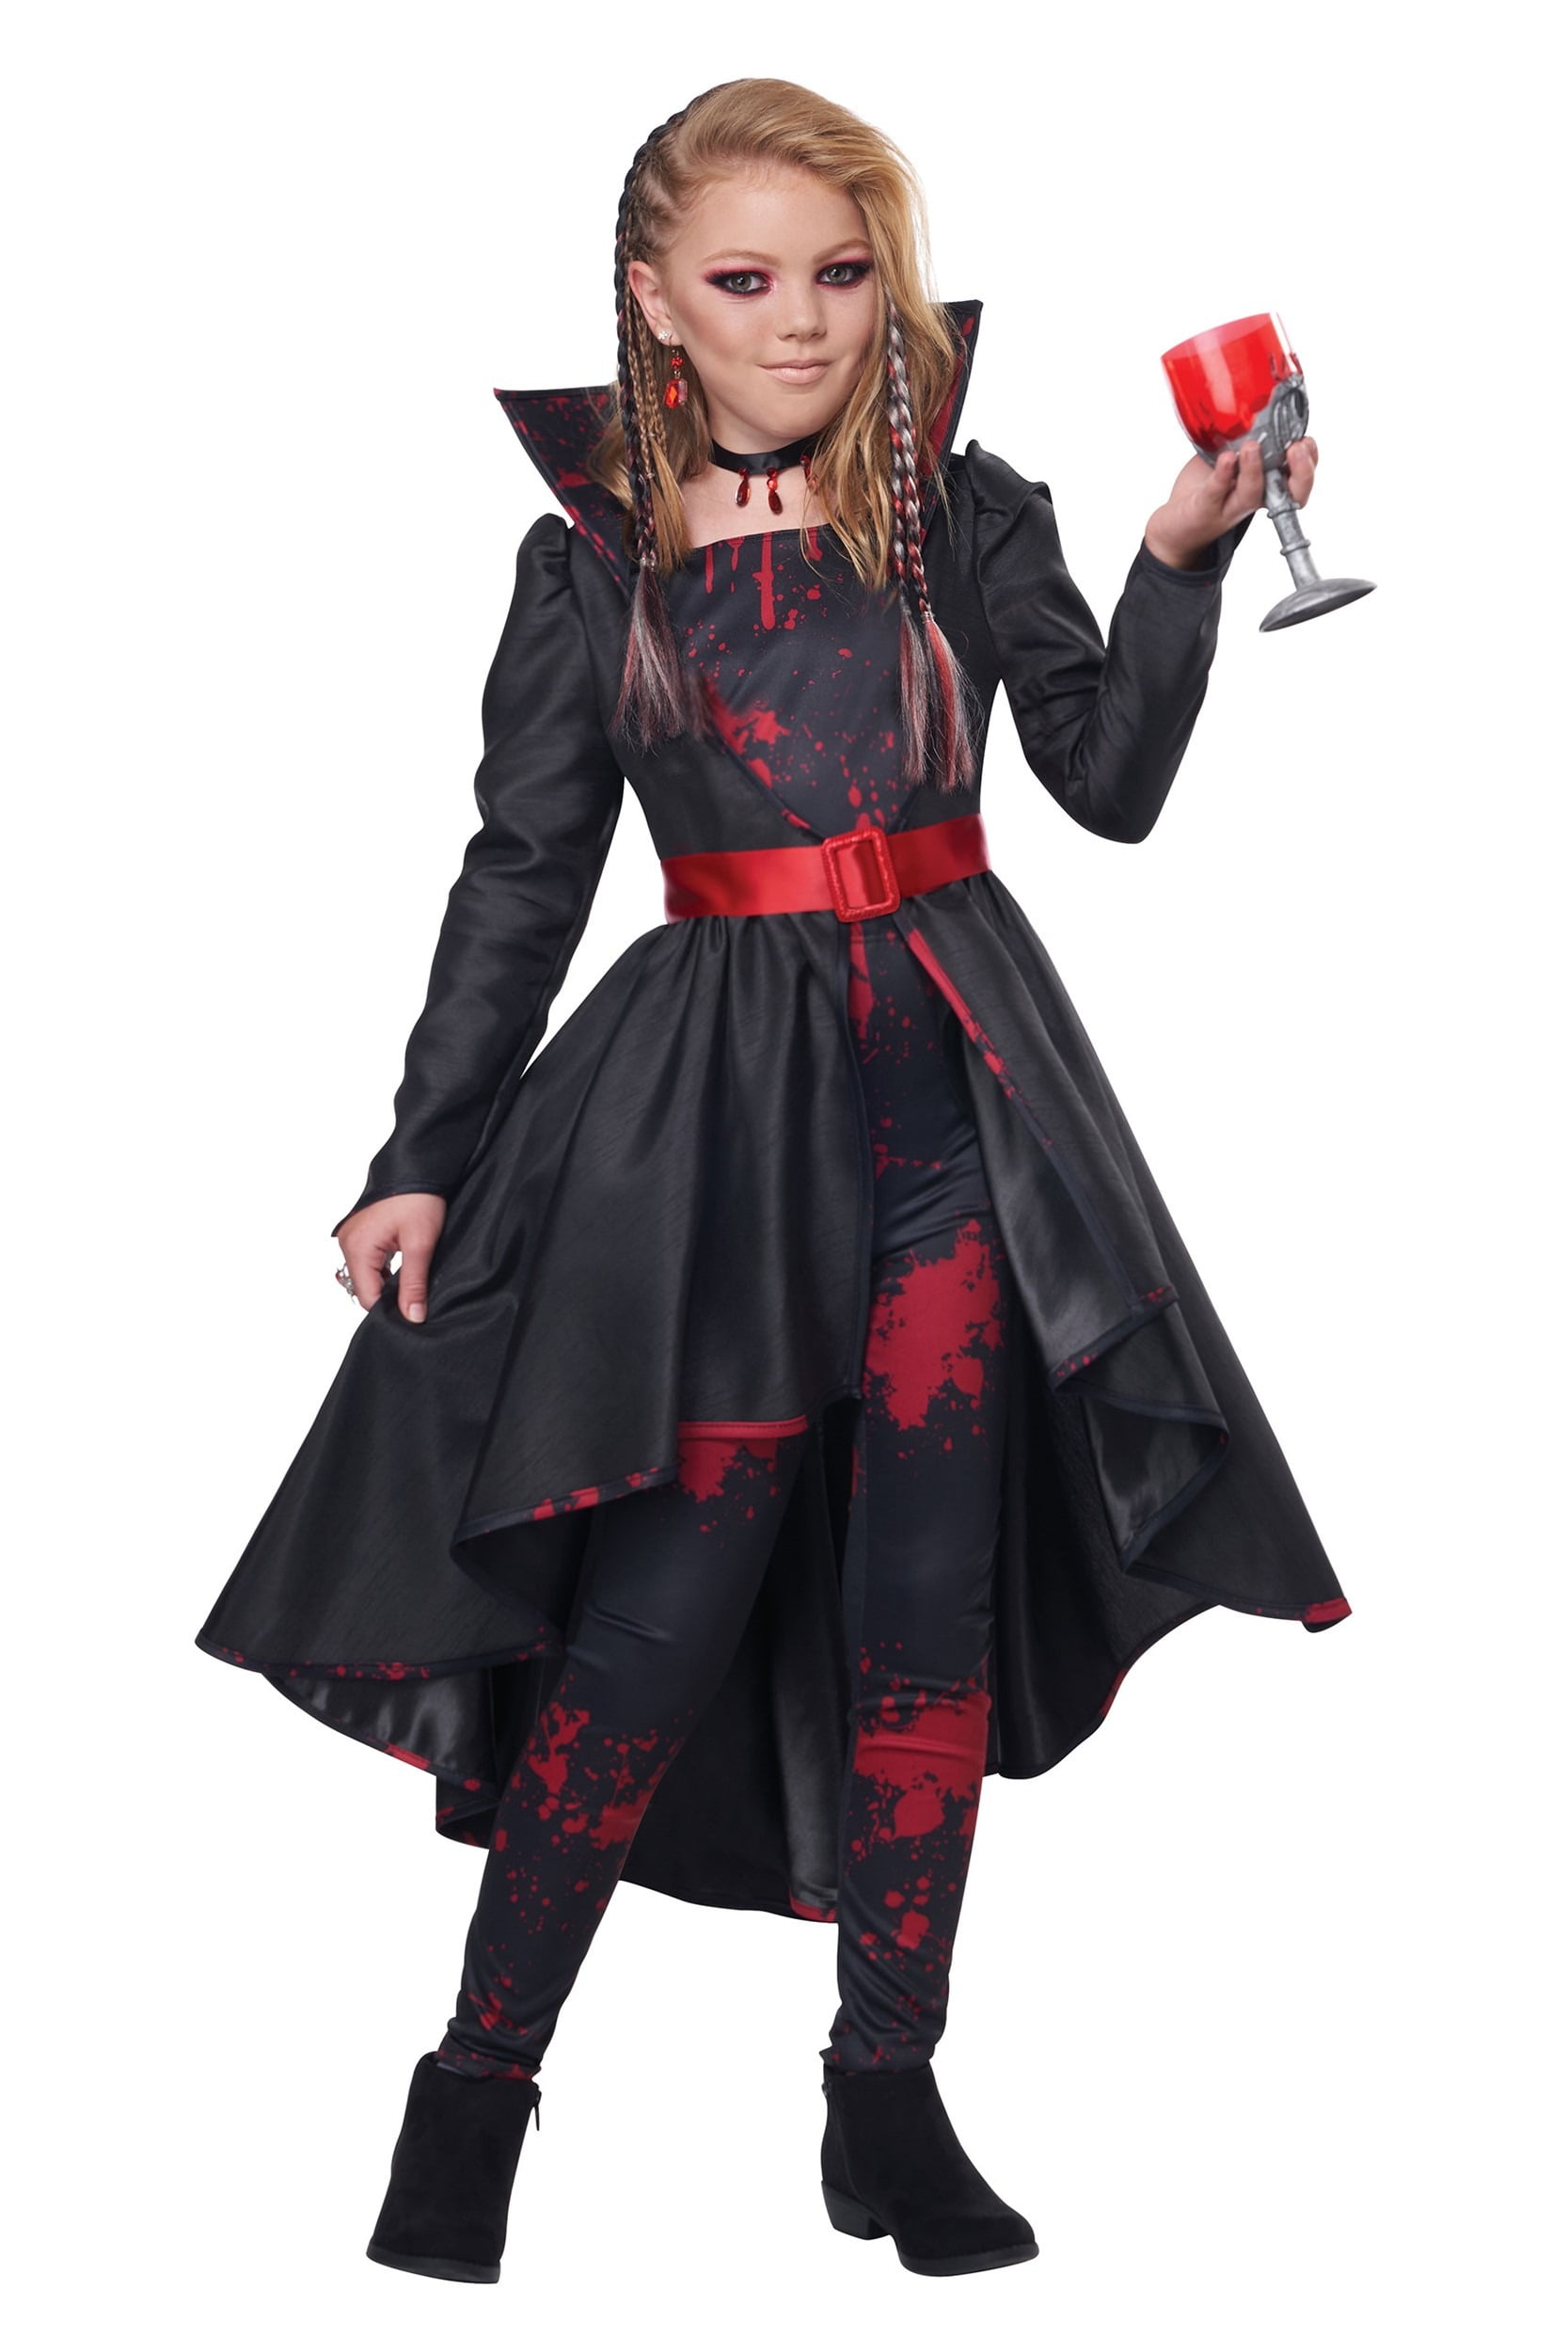 Steampunk Cosplay GOTHIC VAMPIRE SUN GLASSES Rocker Halloween costume-BLOOD RED 